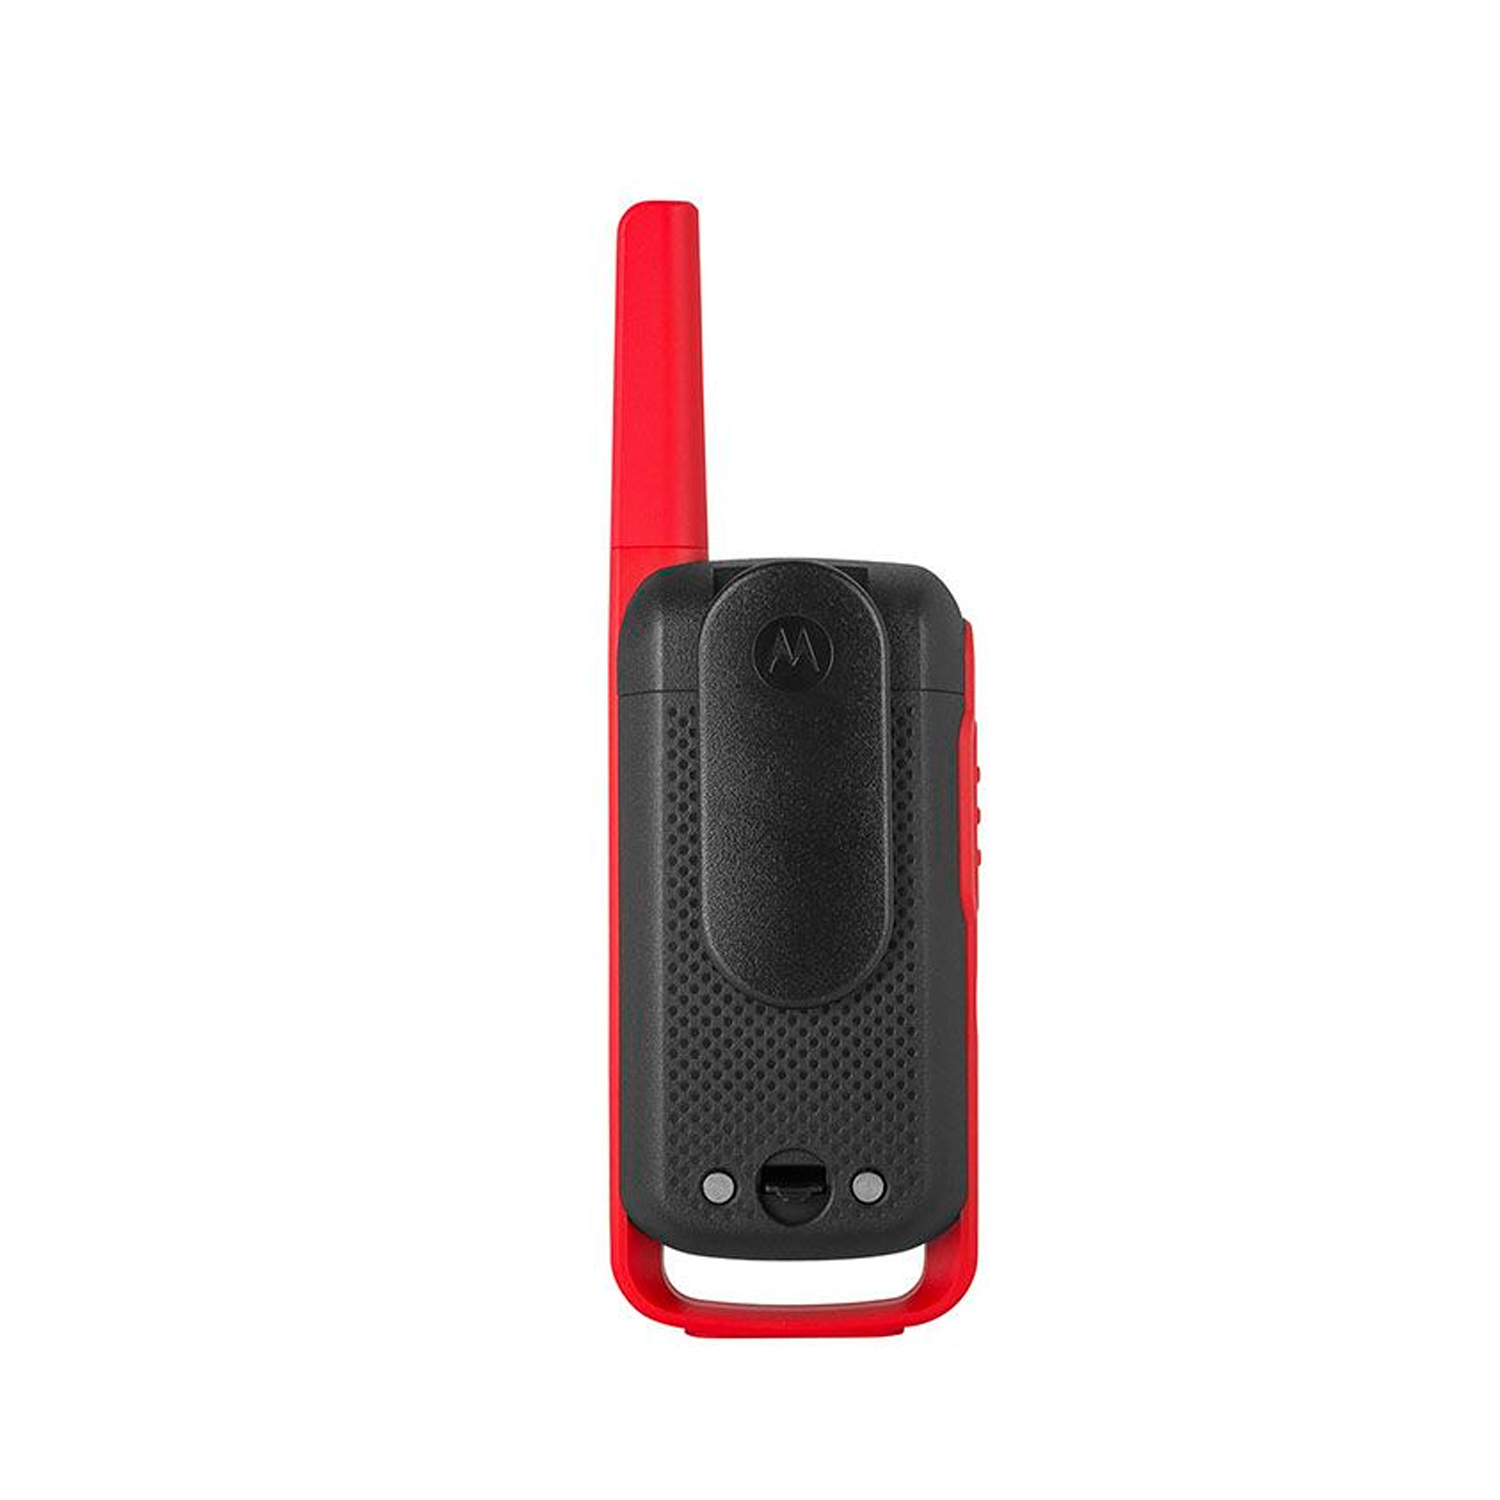 Walkie Talkie Motorola T210TP / 32 KM / 22 Canais - Preto / Vermelho (3 Unidades)
